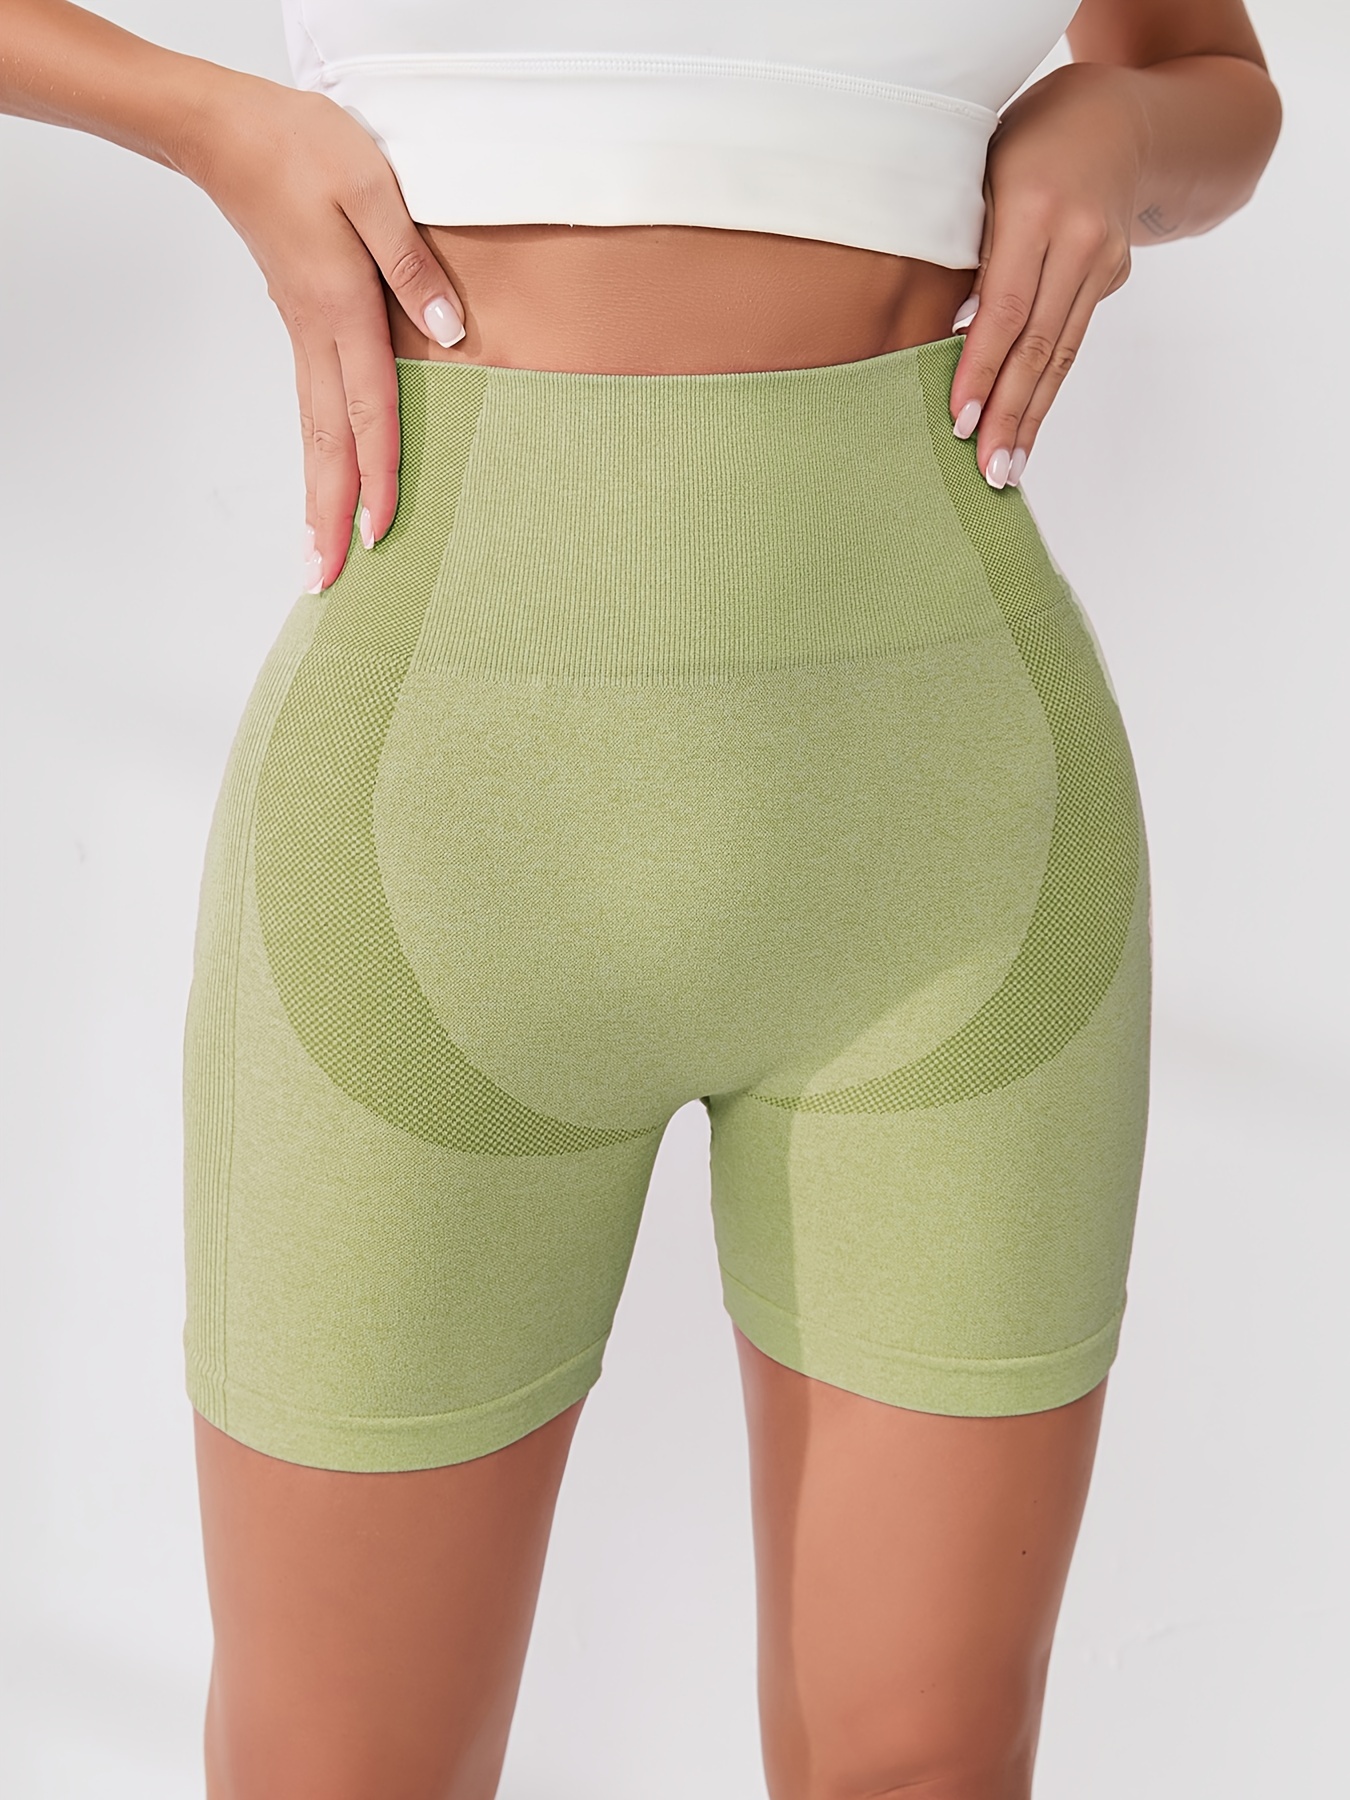 HIGORUN Women's High Waisted Ruched Yoga Pants Tummy Control